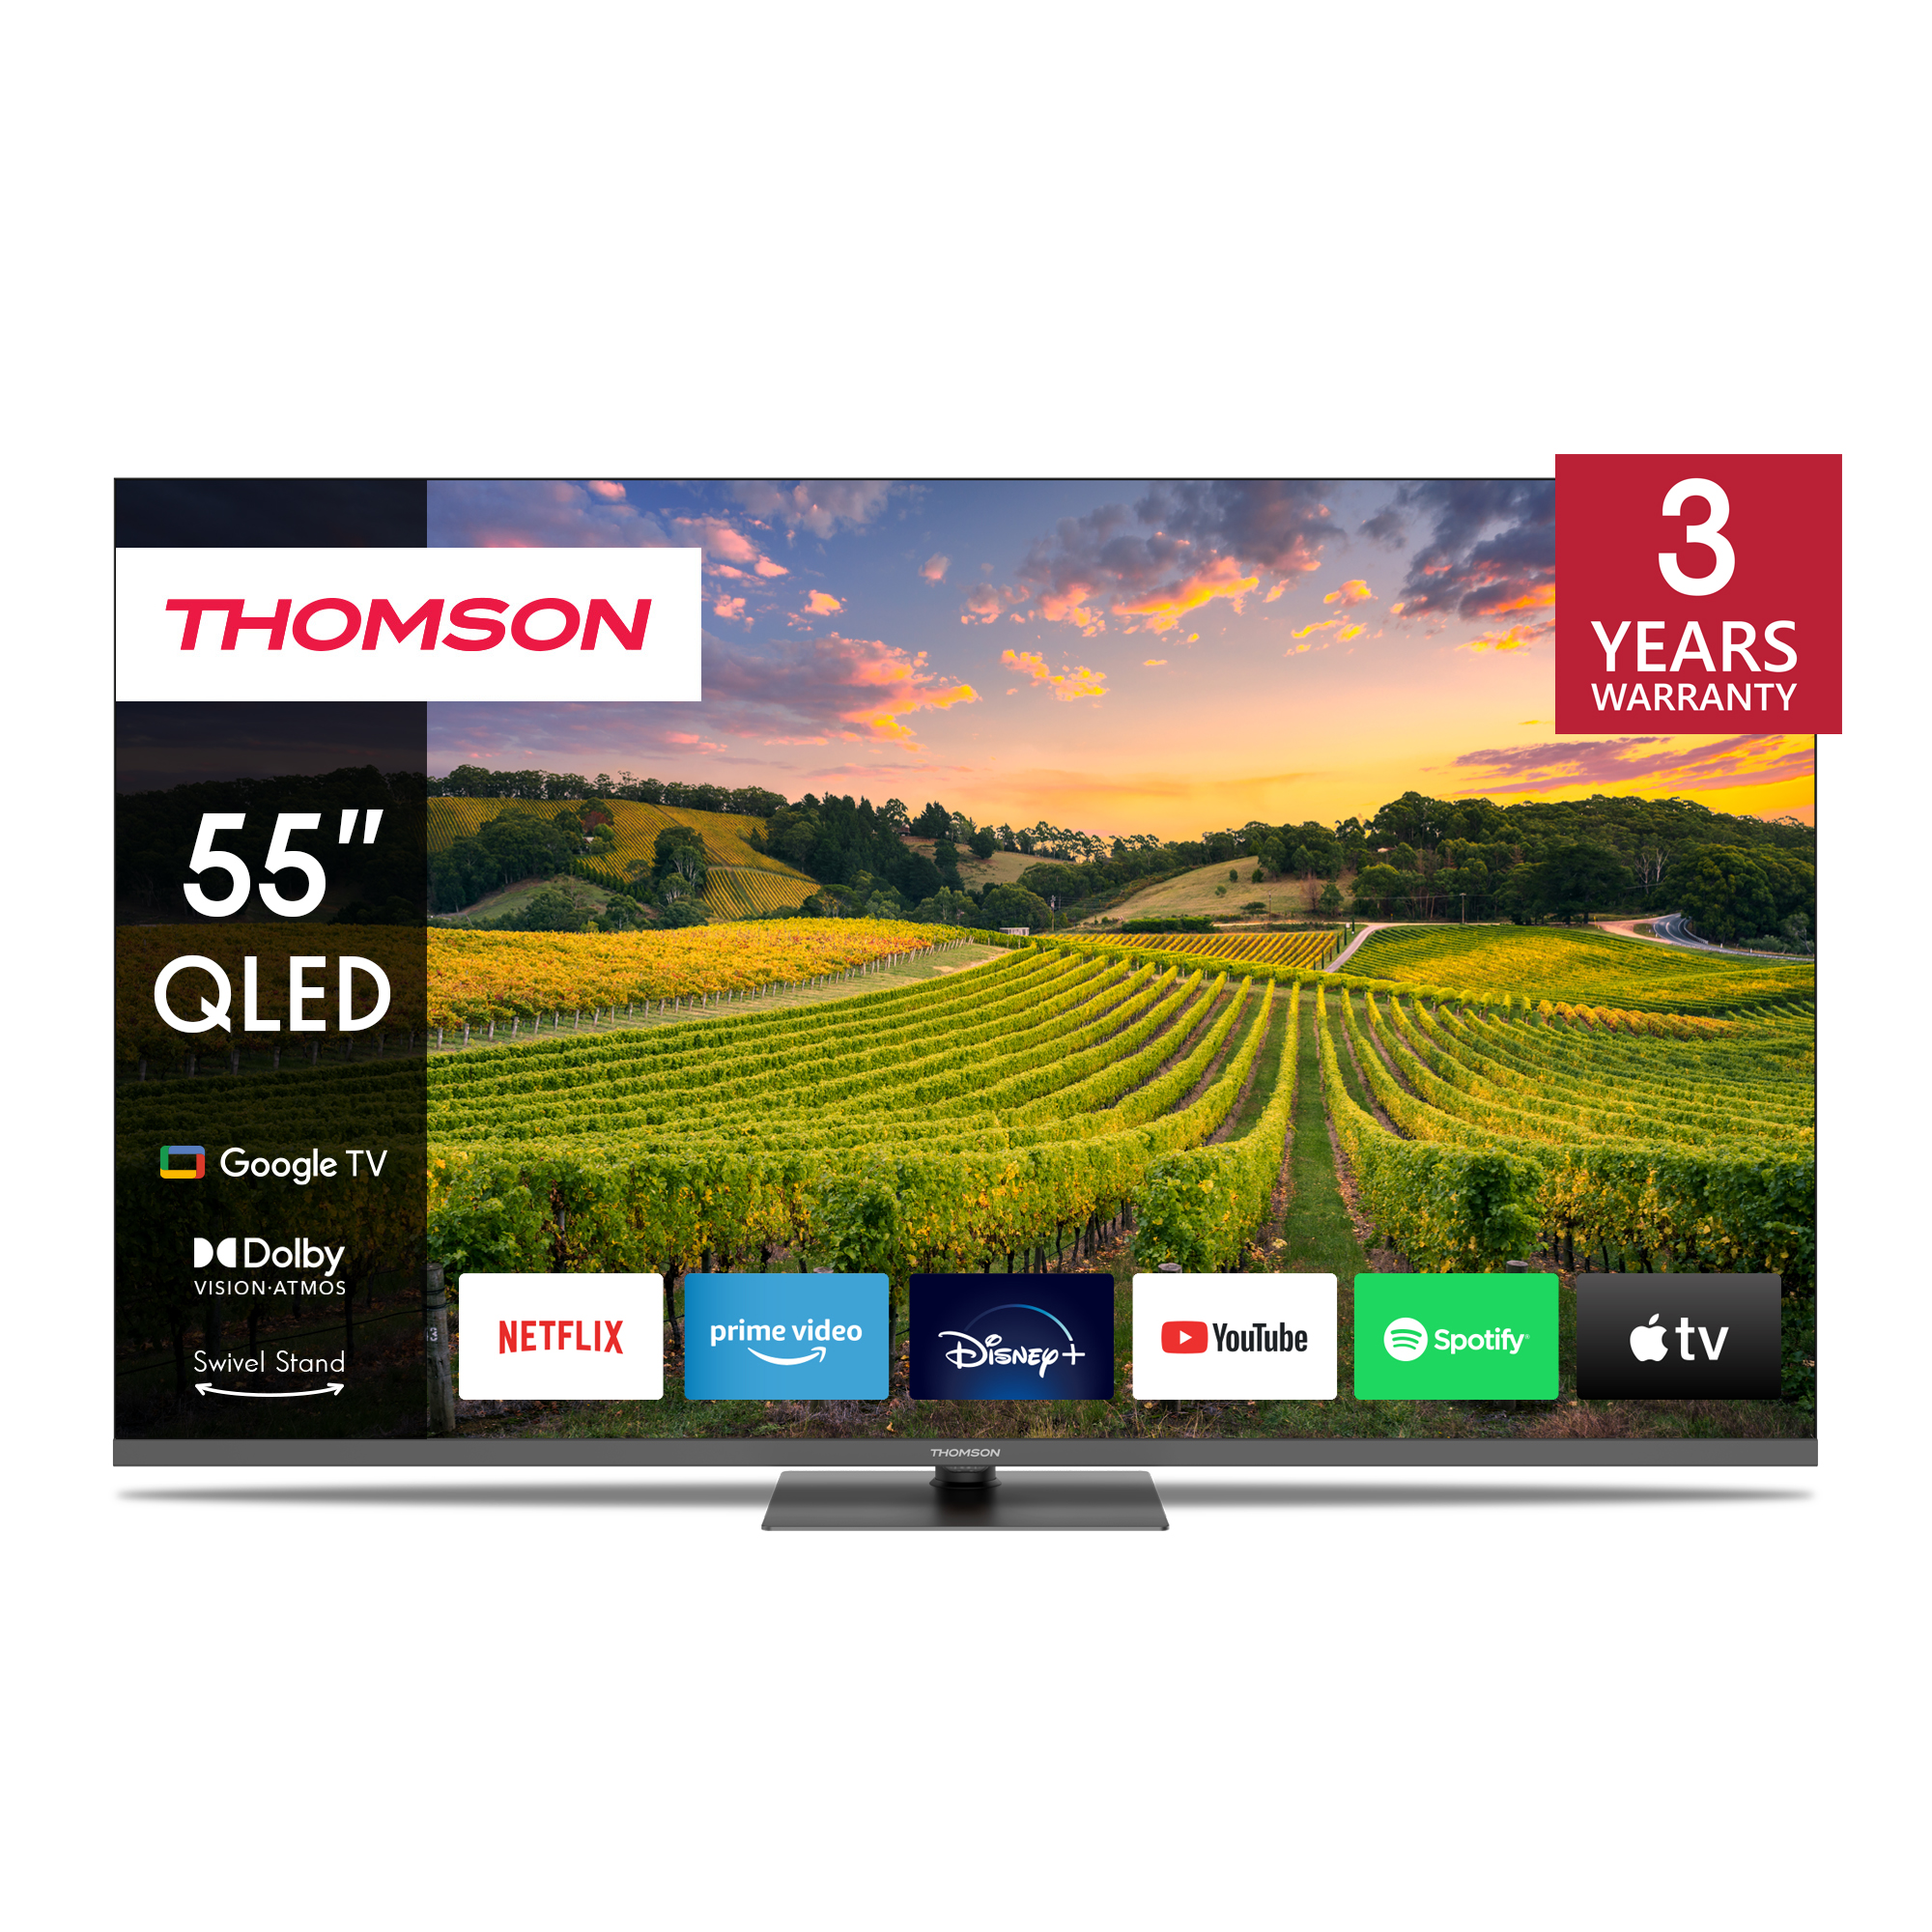 Thomson 55QG5C14 QLED Google TV